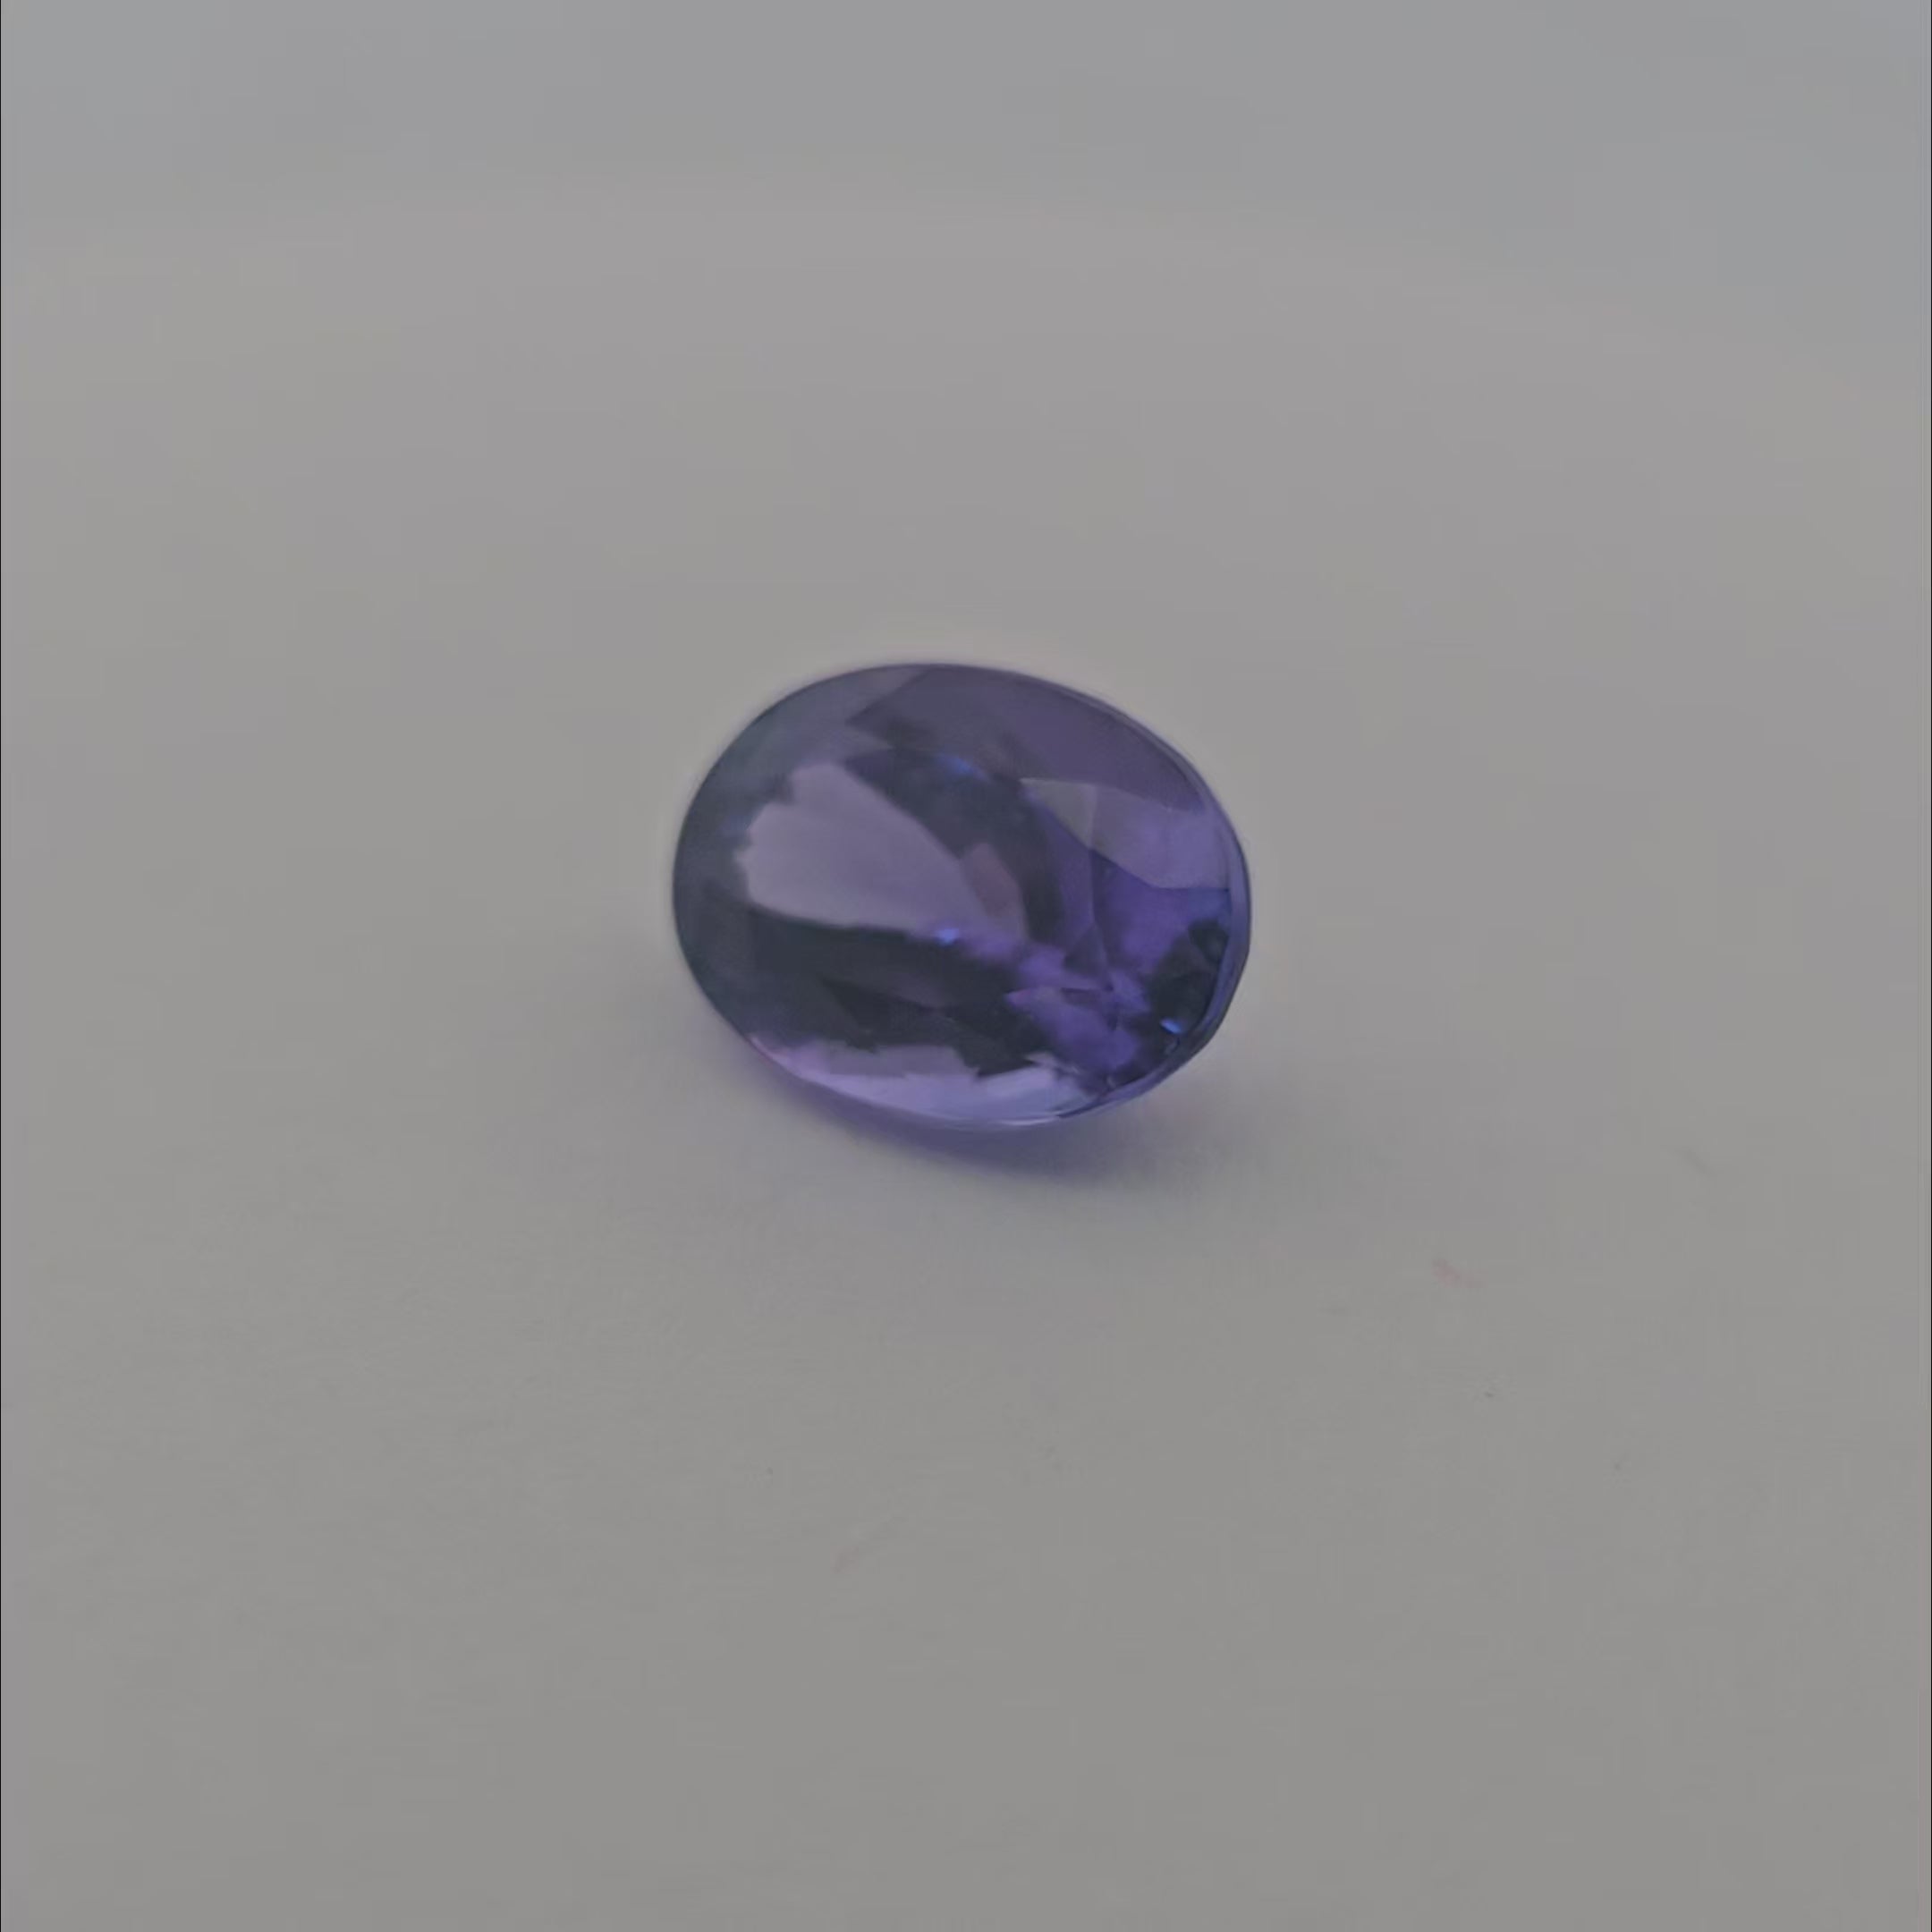 Natural Blue Tanzanite Stone 5.68 Carats Oval Cut (12.8 x 9 mm)